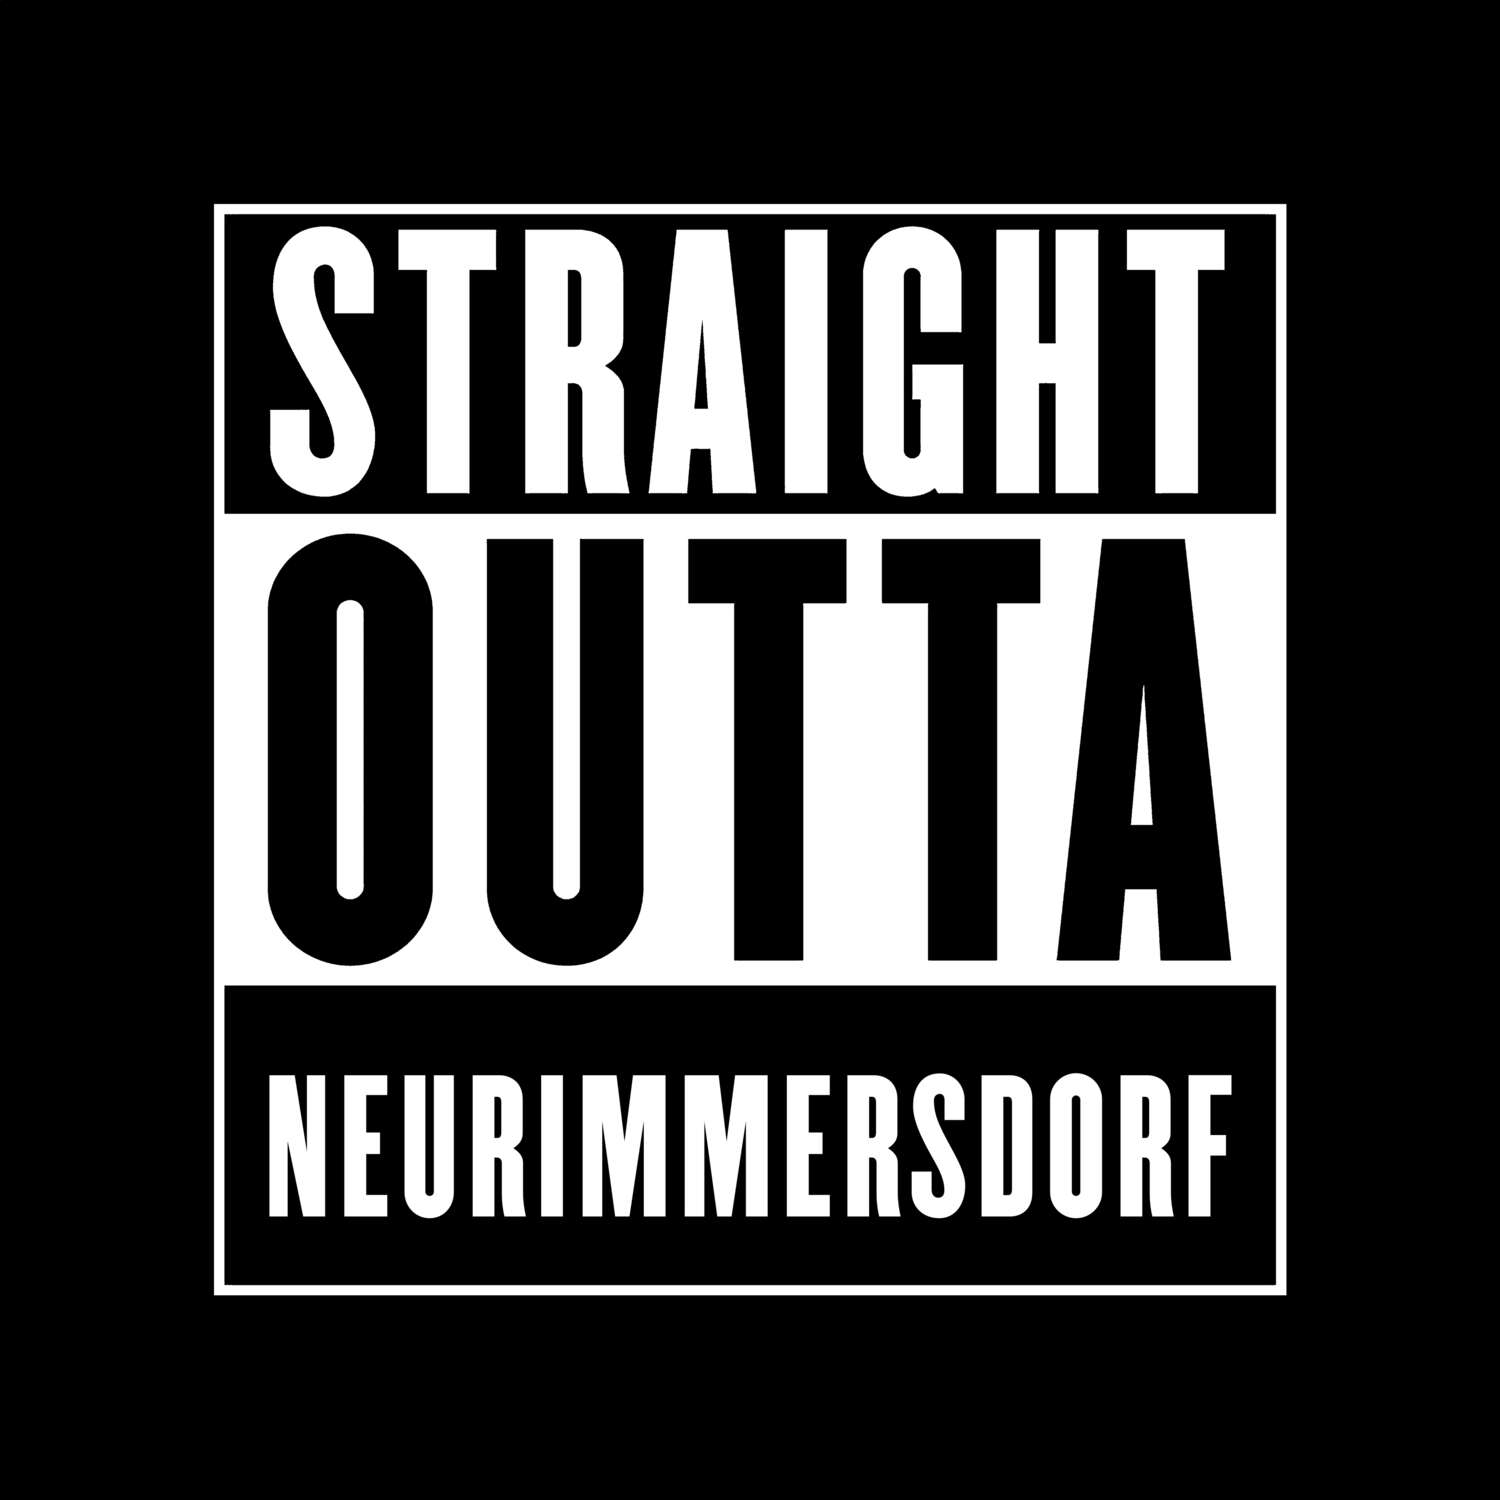 Neurimmersdorf T-Shirt »Straight Outta«